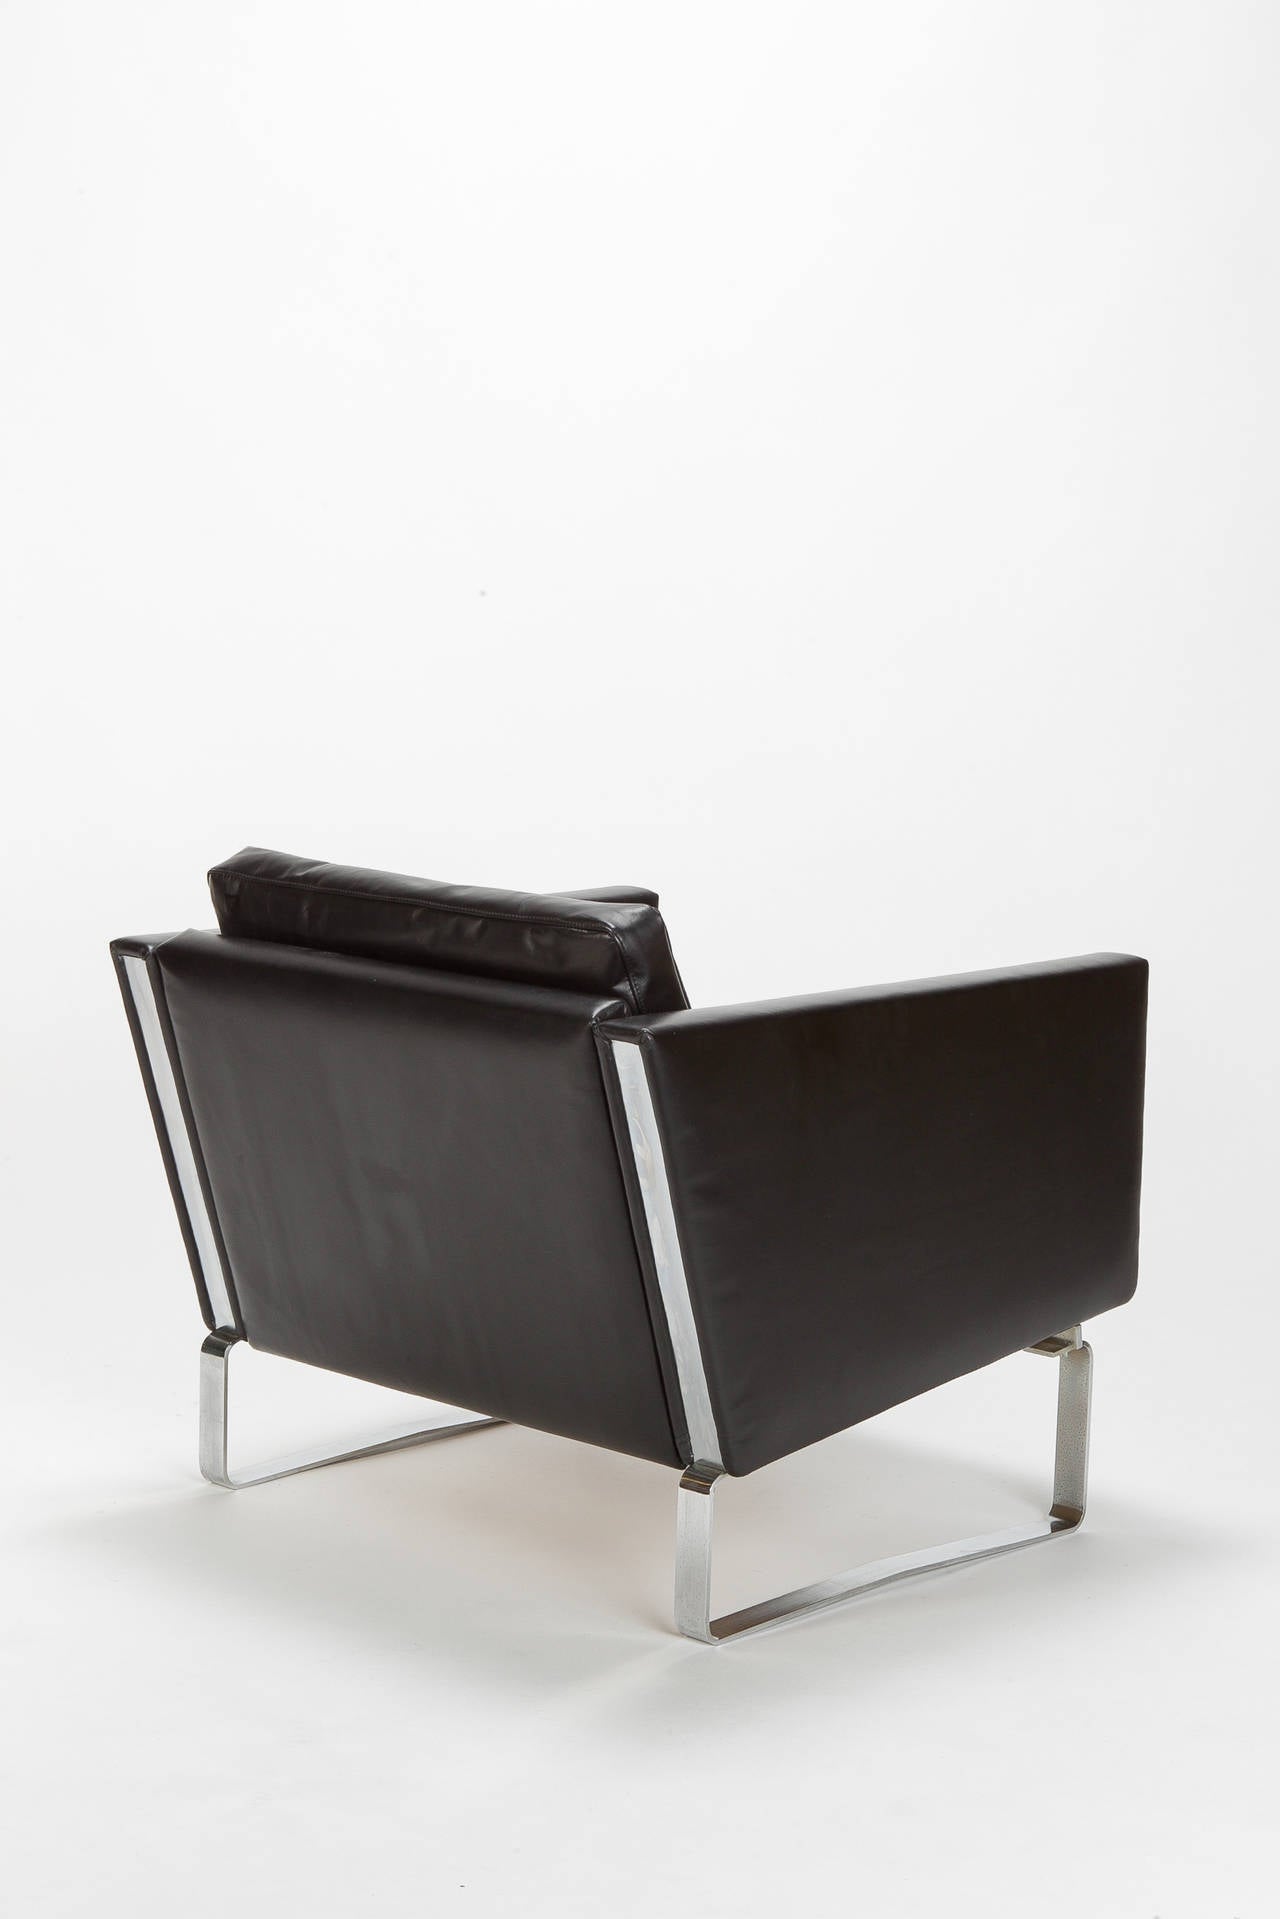 Danish Leather and Steel Lounge Chair JH-801 by Hans Wegner for Johannes Hansen, 1970s